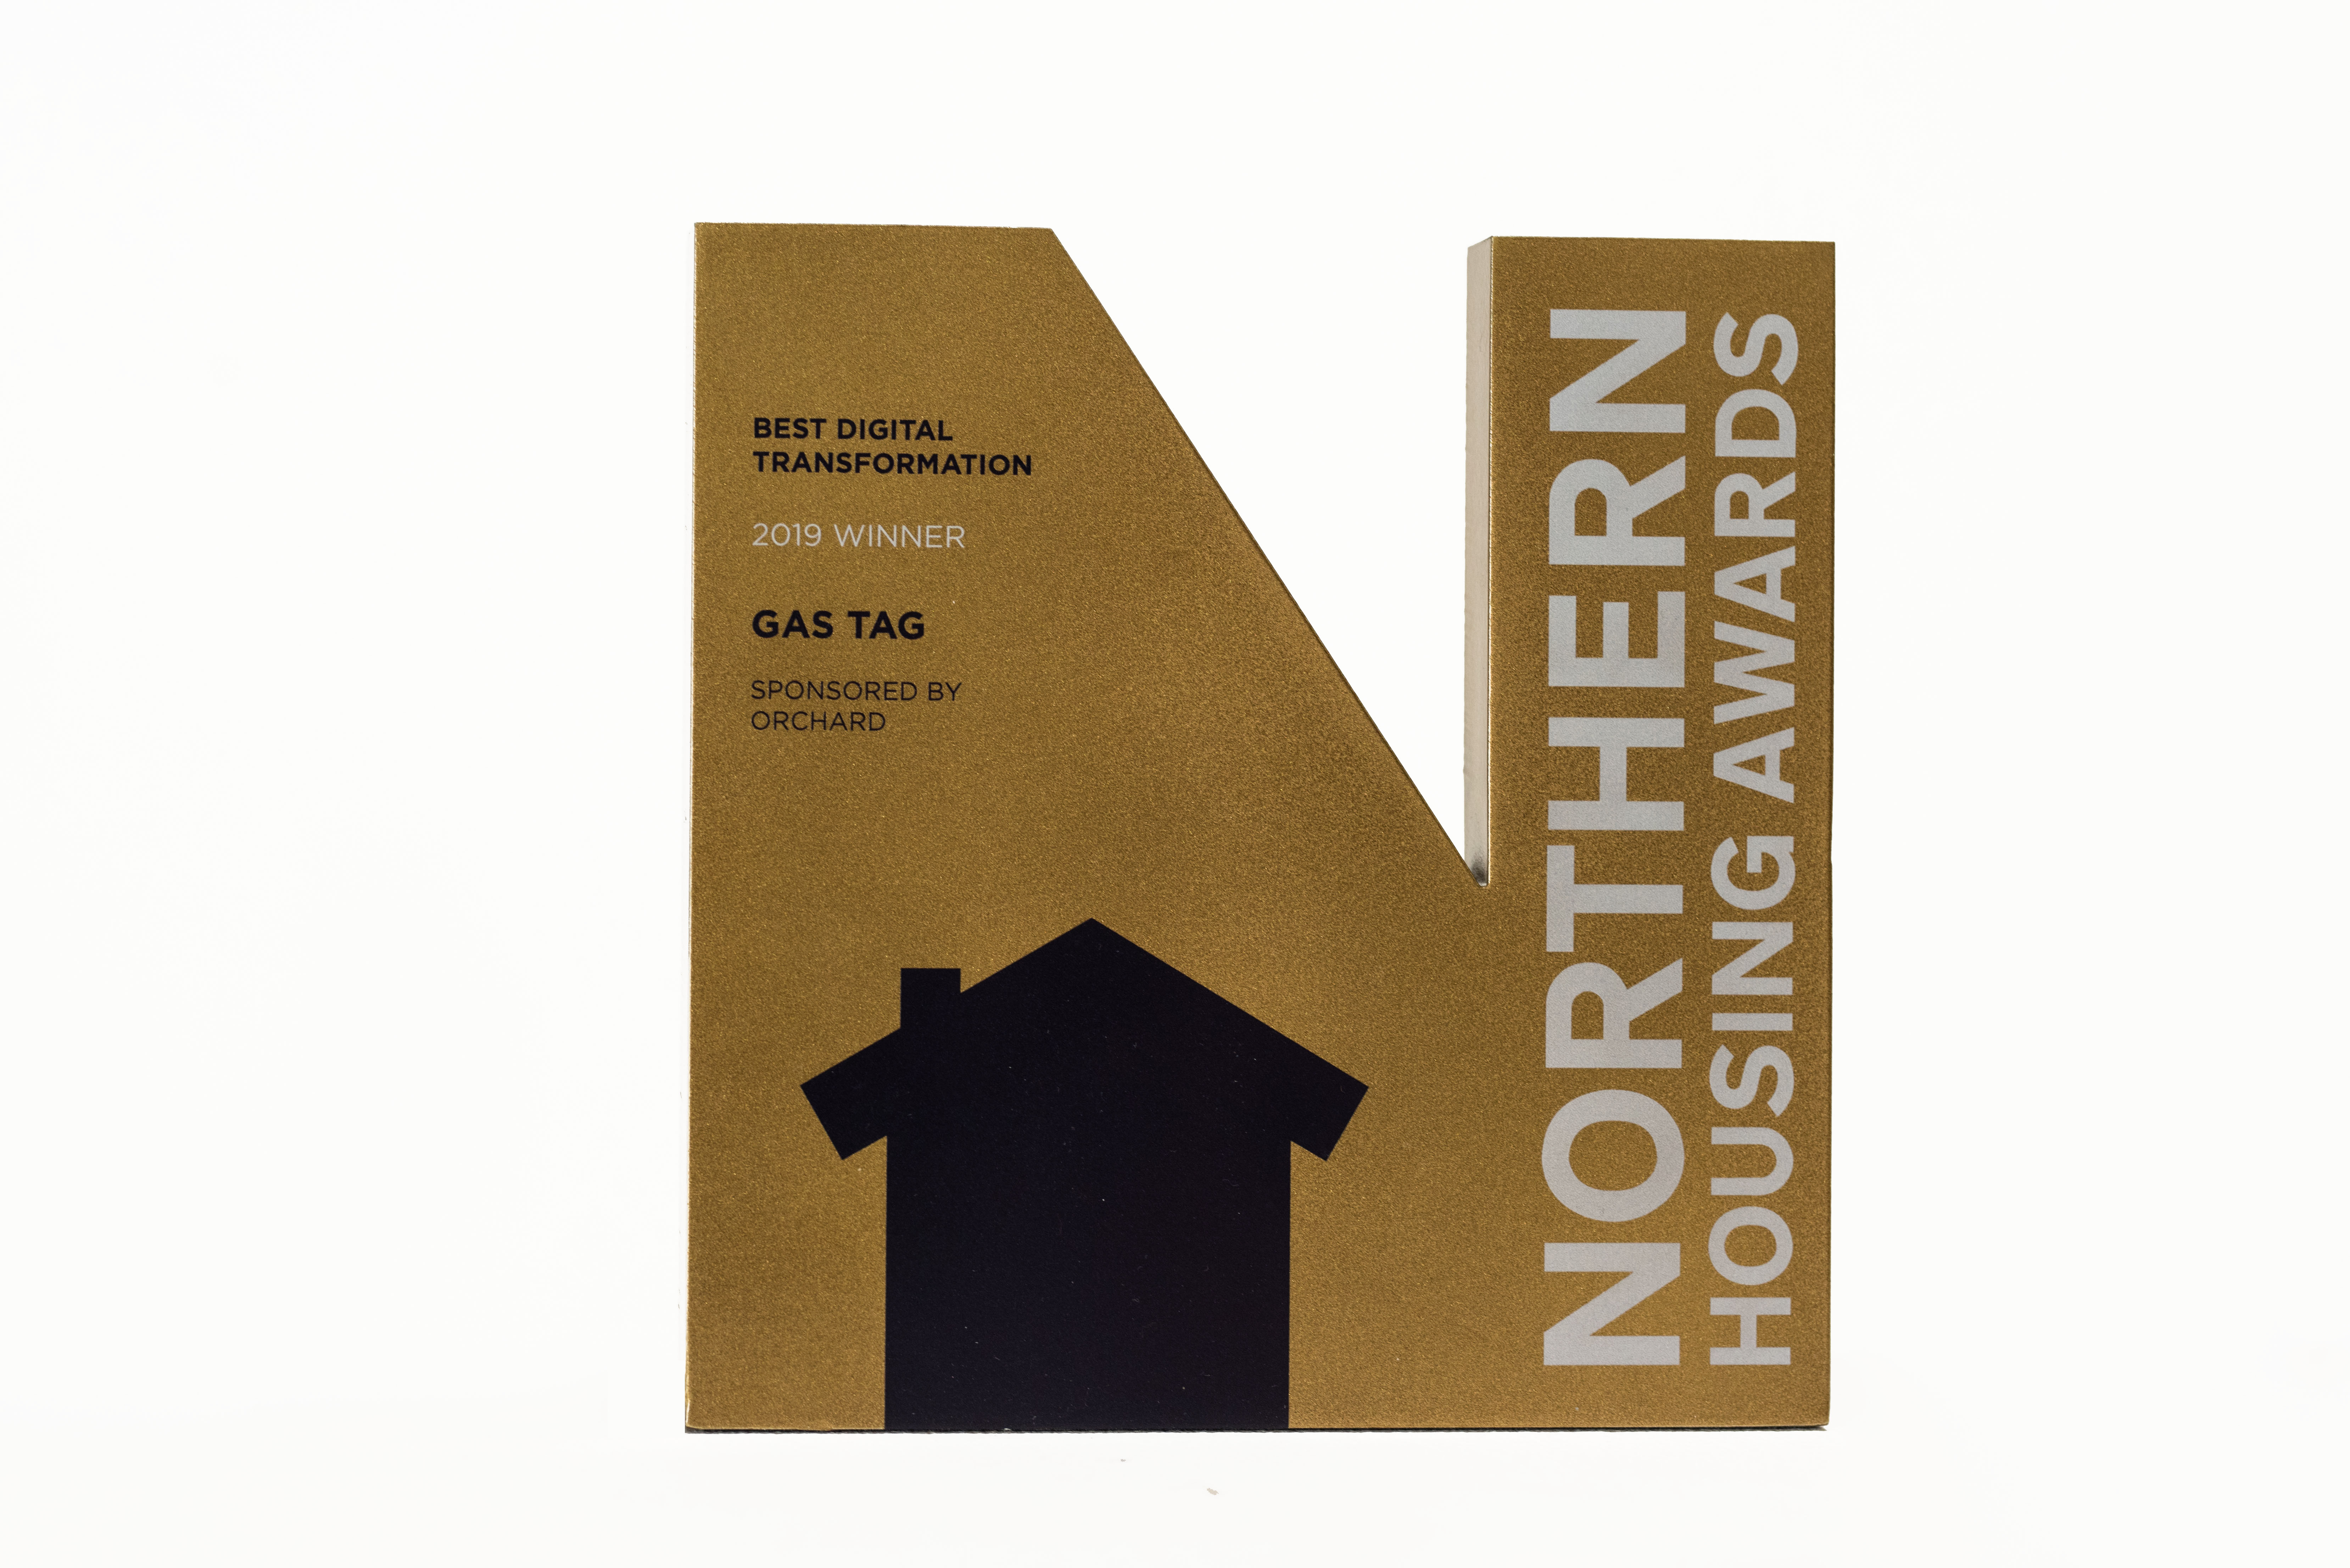 Northern Housing